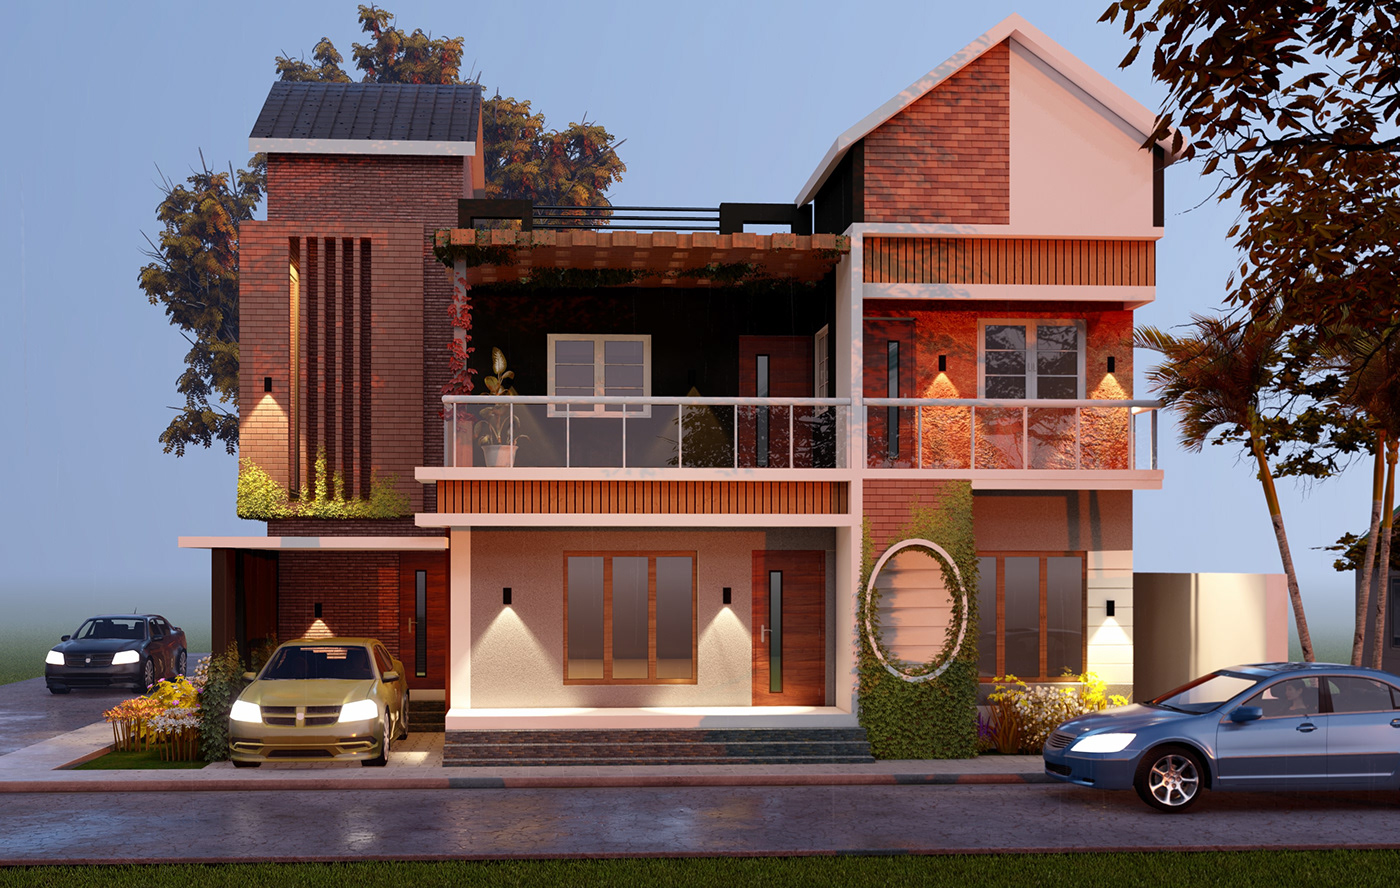 architecture visualization exterior Render Modern house designs modern house elevation home design 3d modeling 3d render home exterior